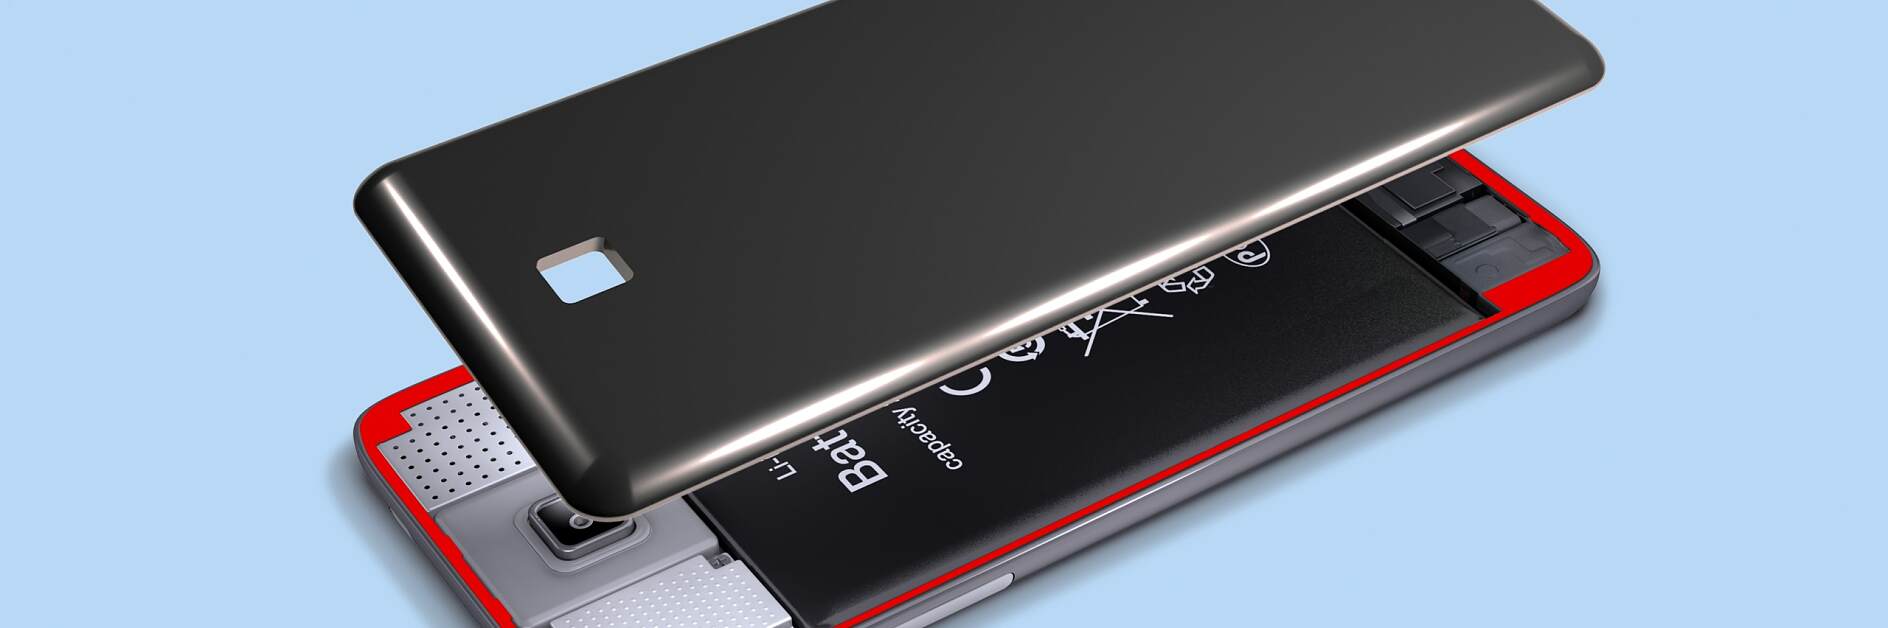 tesa-electronics-smartphone-back-cover-mounting-illustration